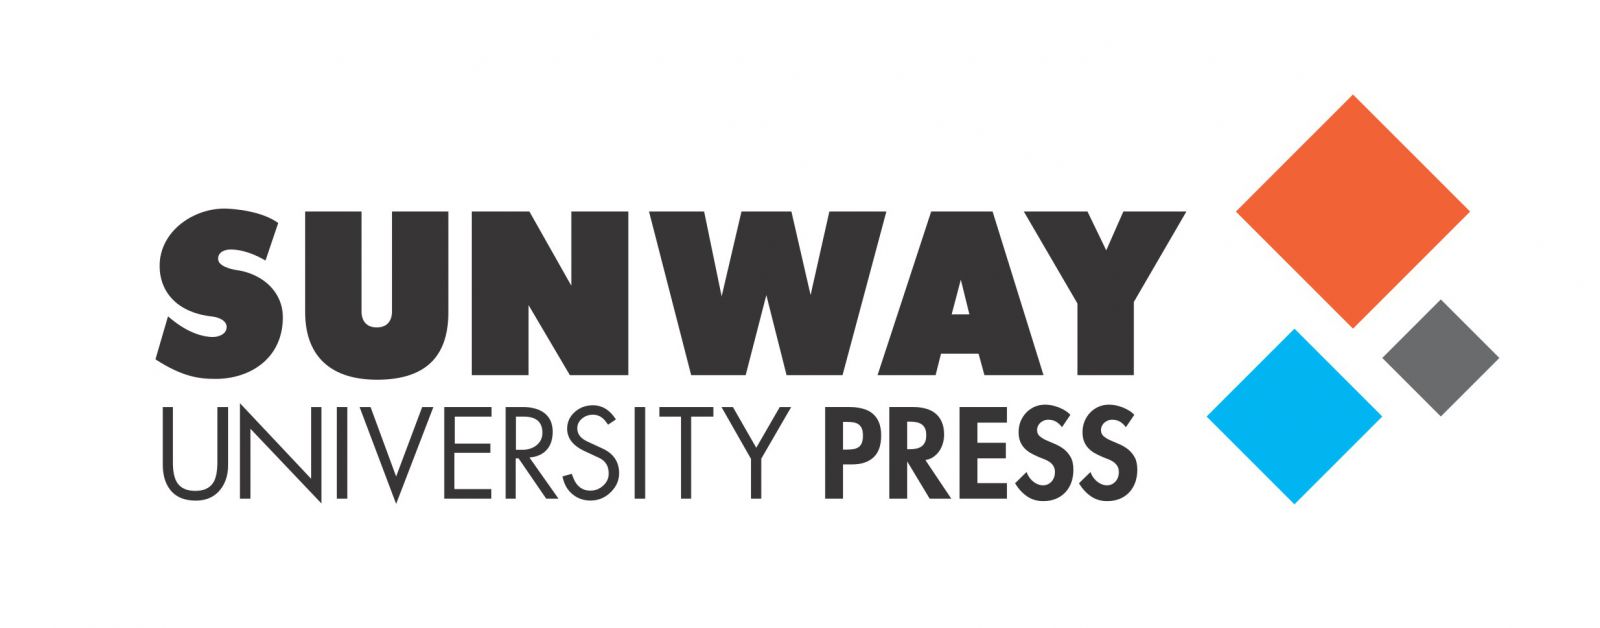 New Publisher: Sunway University Press